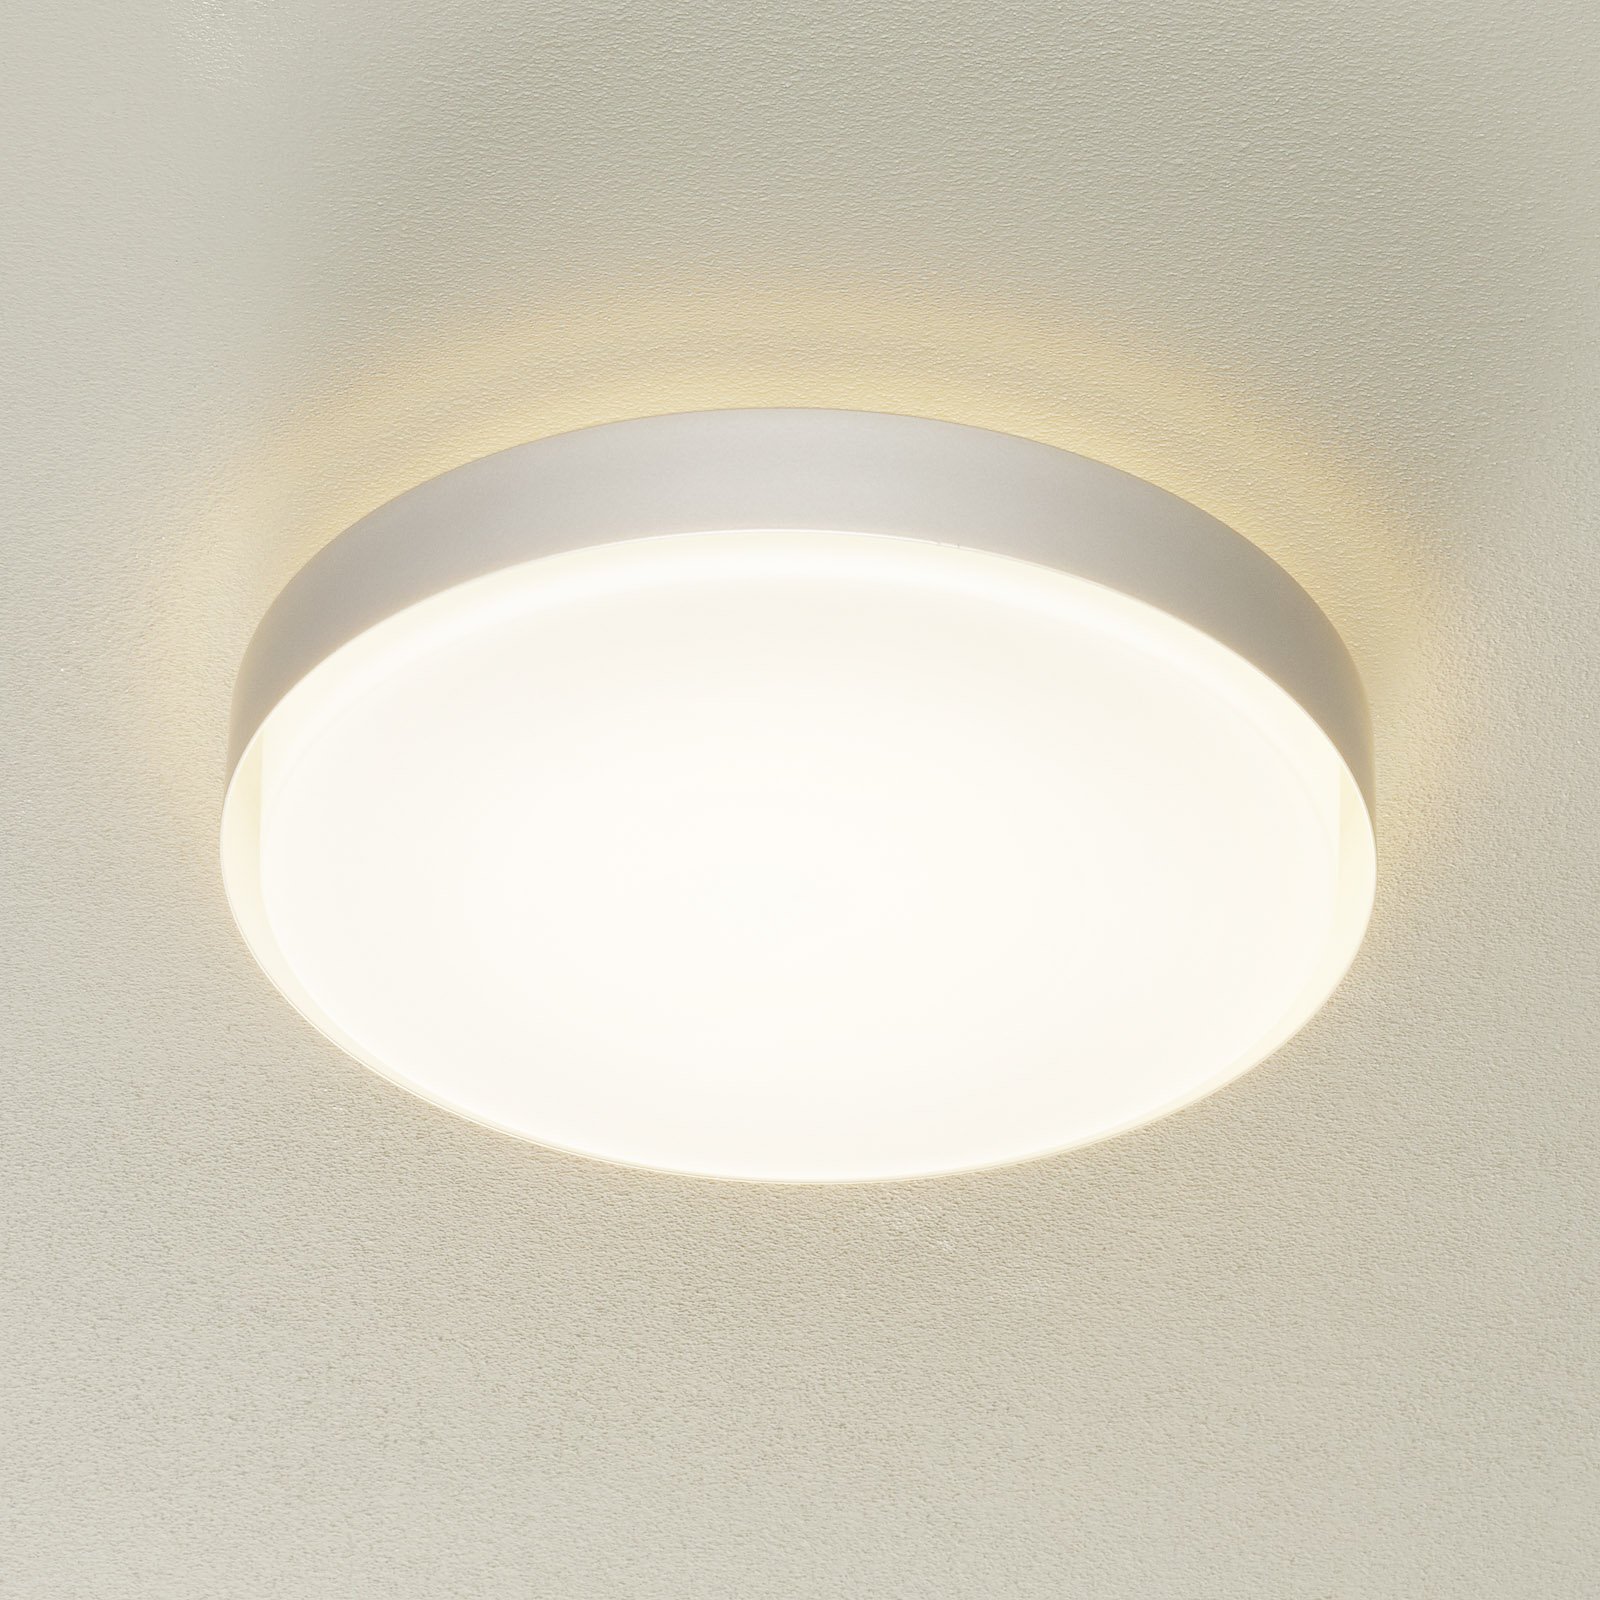 BEGA 34279 Φωτιστικό οροφής LED, αλουμίνιο, Ø 42 cm, DALI